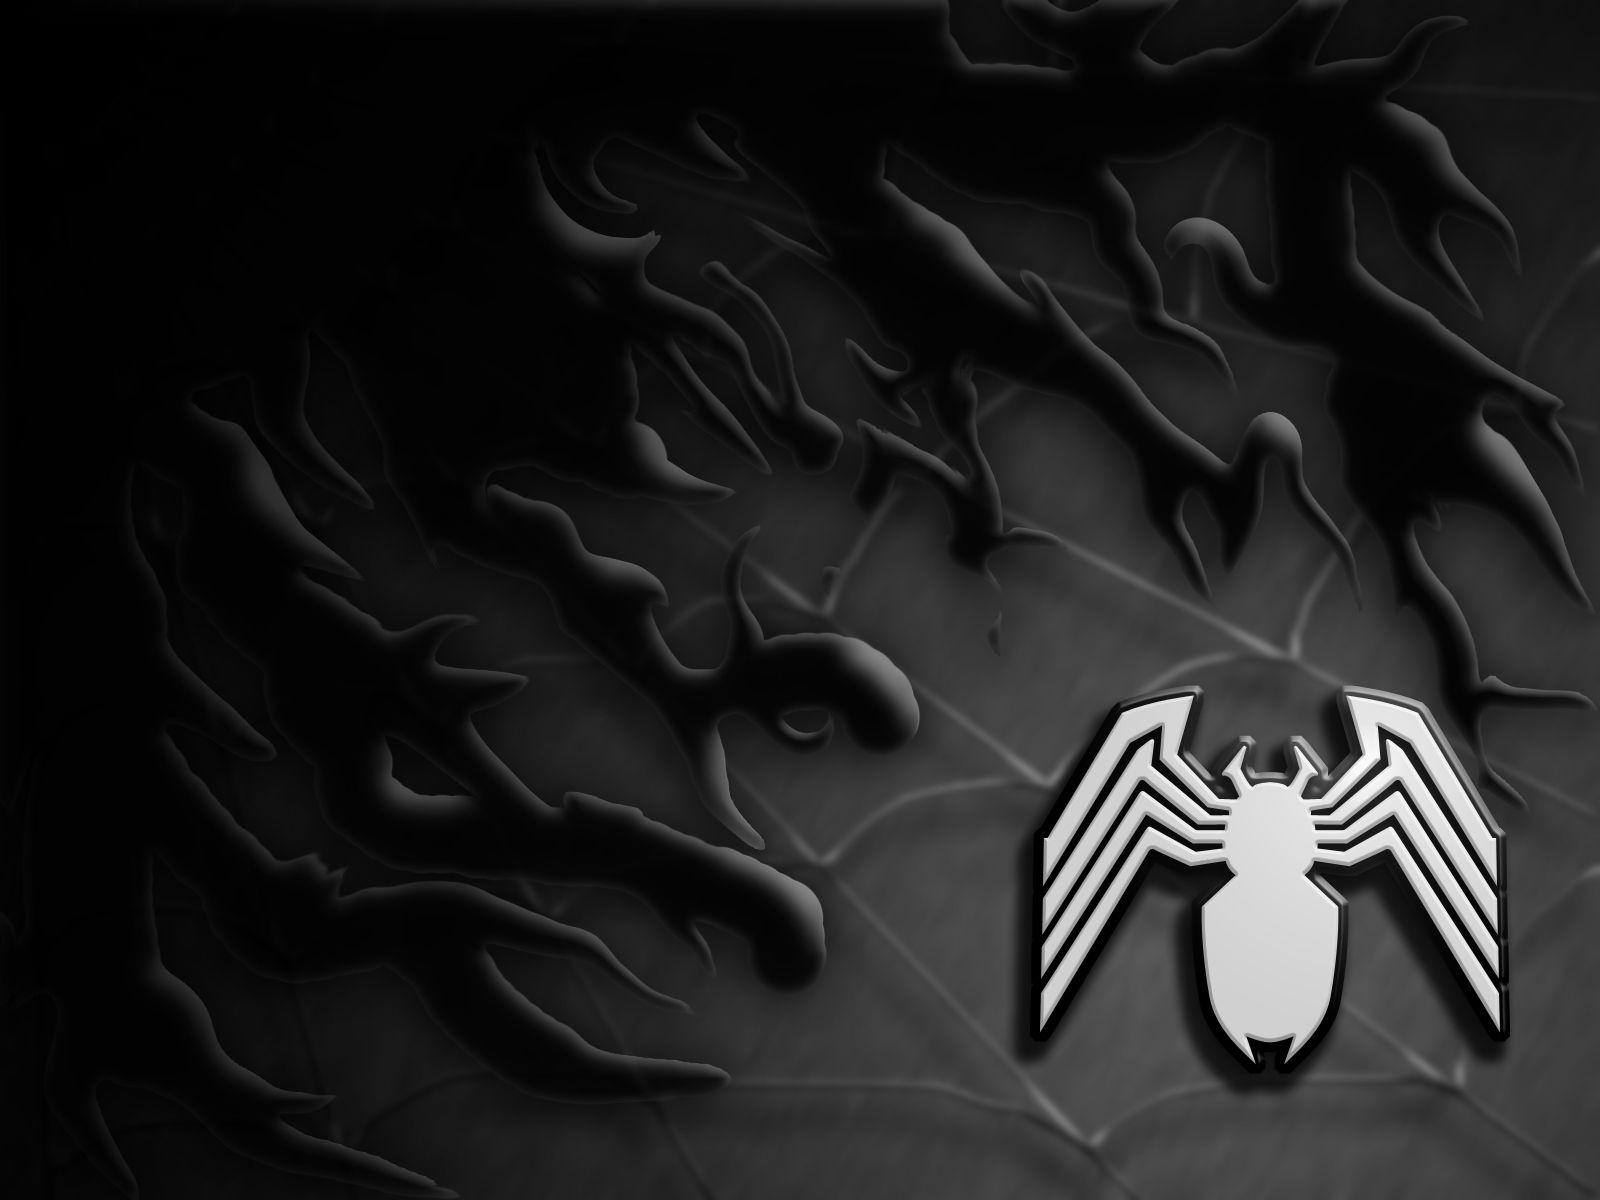 HD wallpaper: Spiderman logo, Venom, Spider-Man, symbols, black background  | Wallpaper Flare